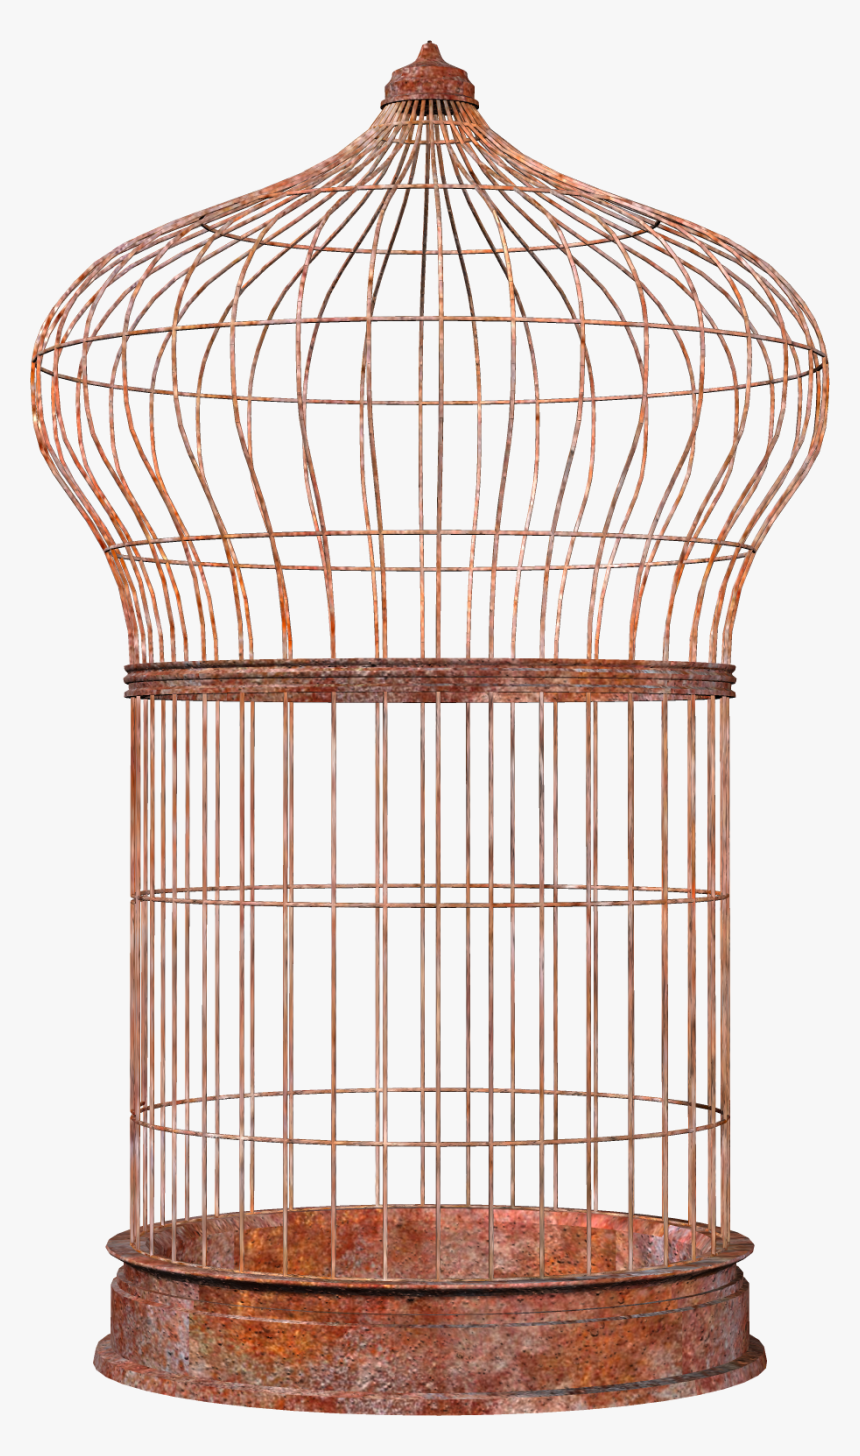 Bird Cage Png Image, Transparent Png, Free Download